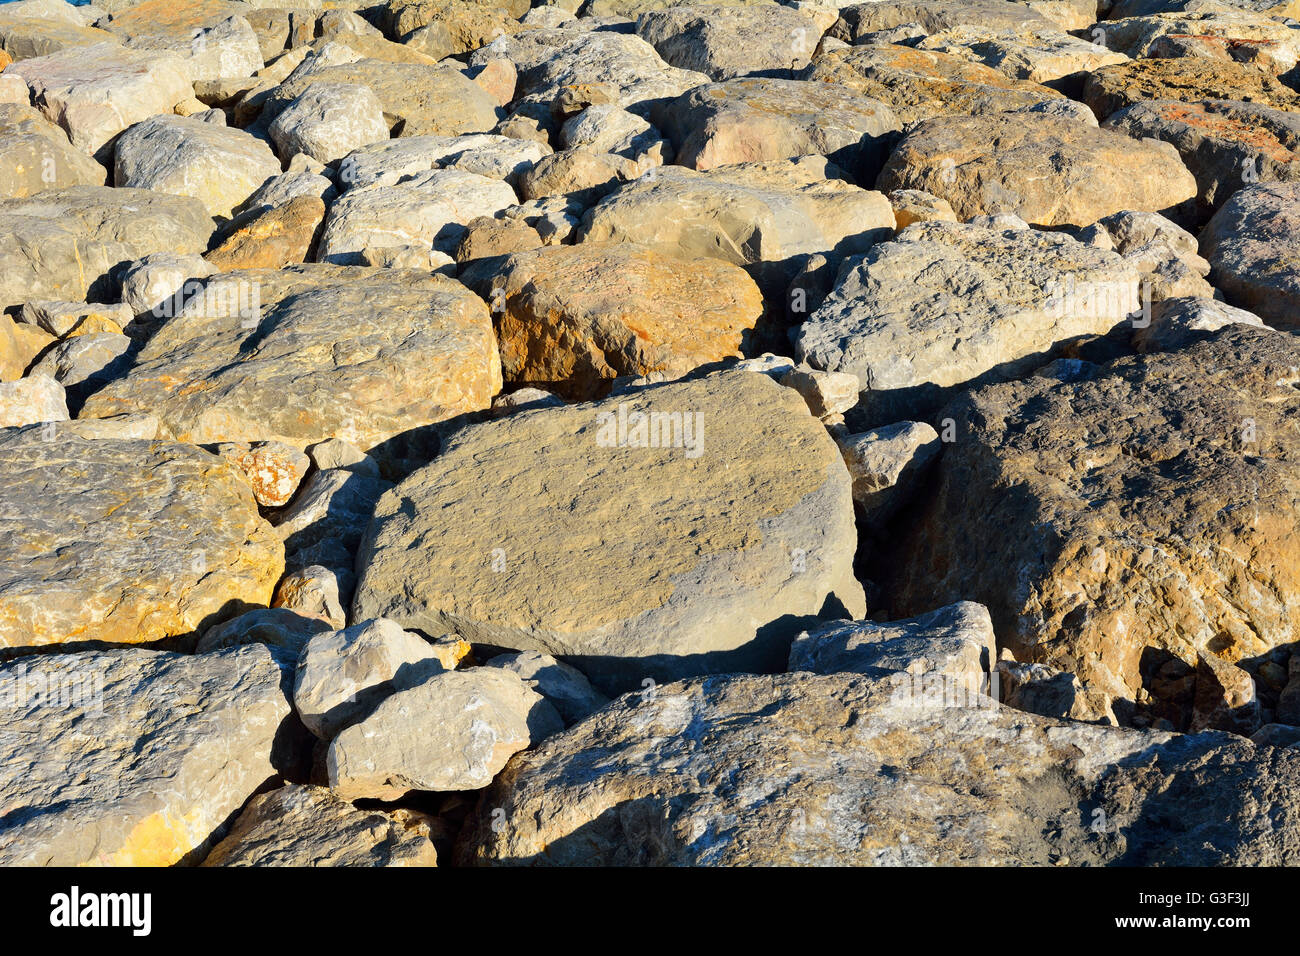 Le pietre come protezione Shore, Saintes-Maries-de-la-Mer, Carmague, Mare mediterraneo, Provence Alpes Cote d Azur, Bouches du Rhone, Francia Foto Stock